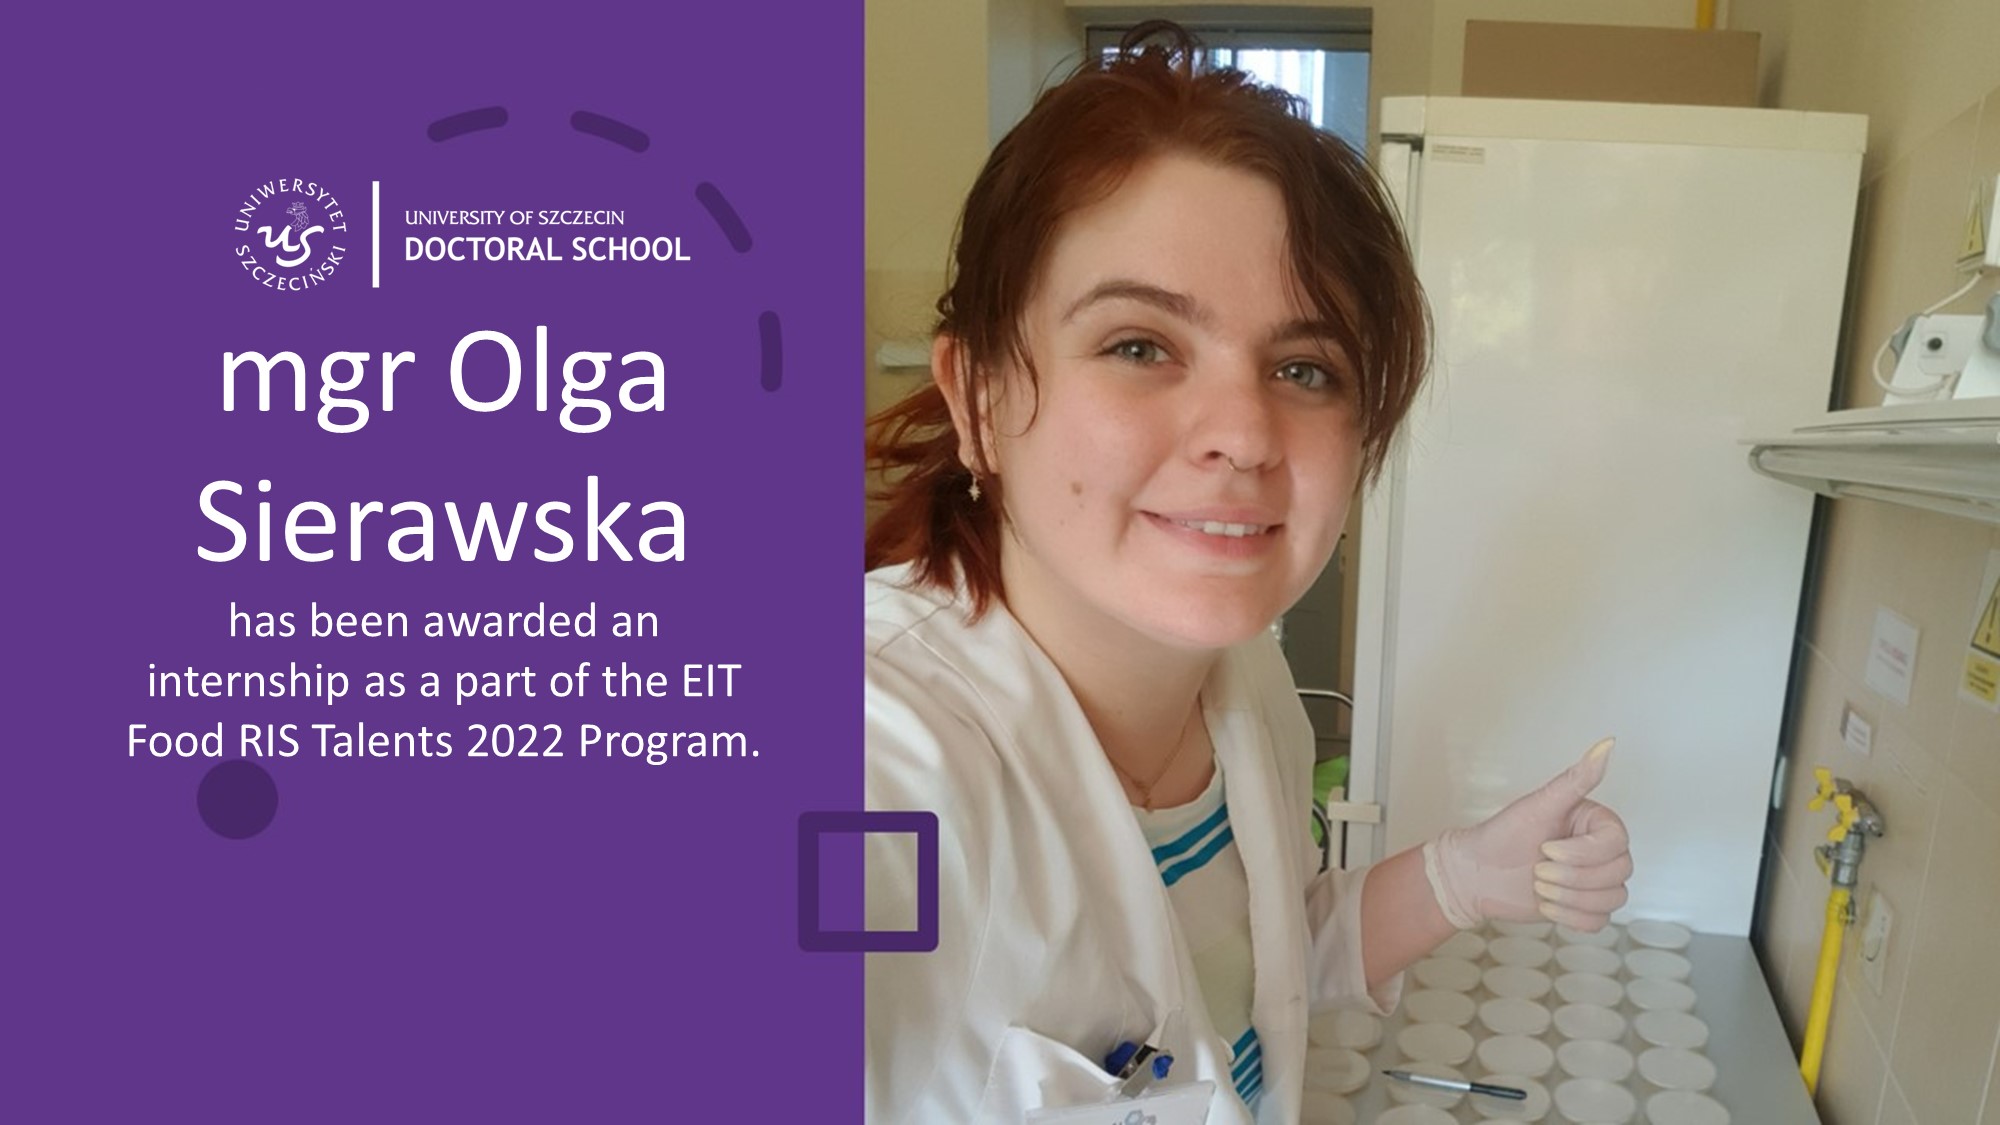 mgr Olga Sierawska, has been awarded an internship as a part of the EIT Food RIS Talents 2022 Program